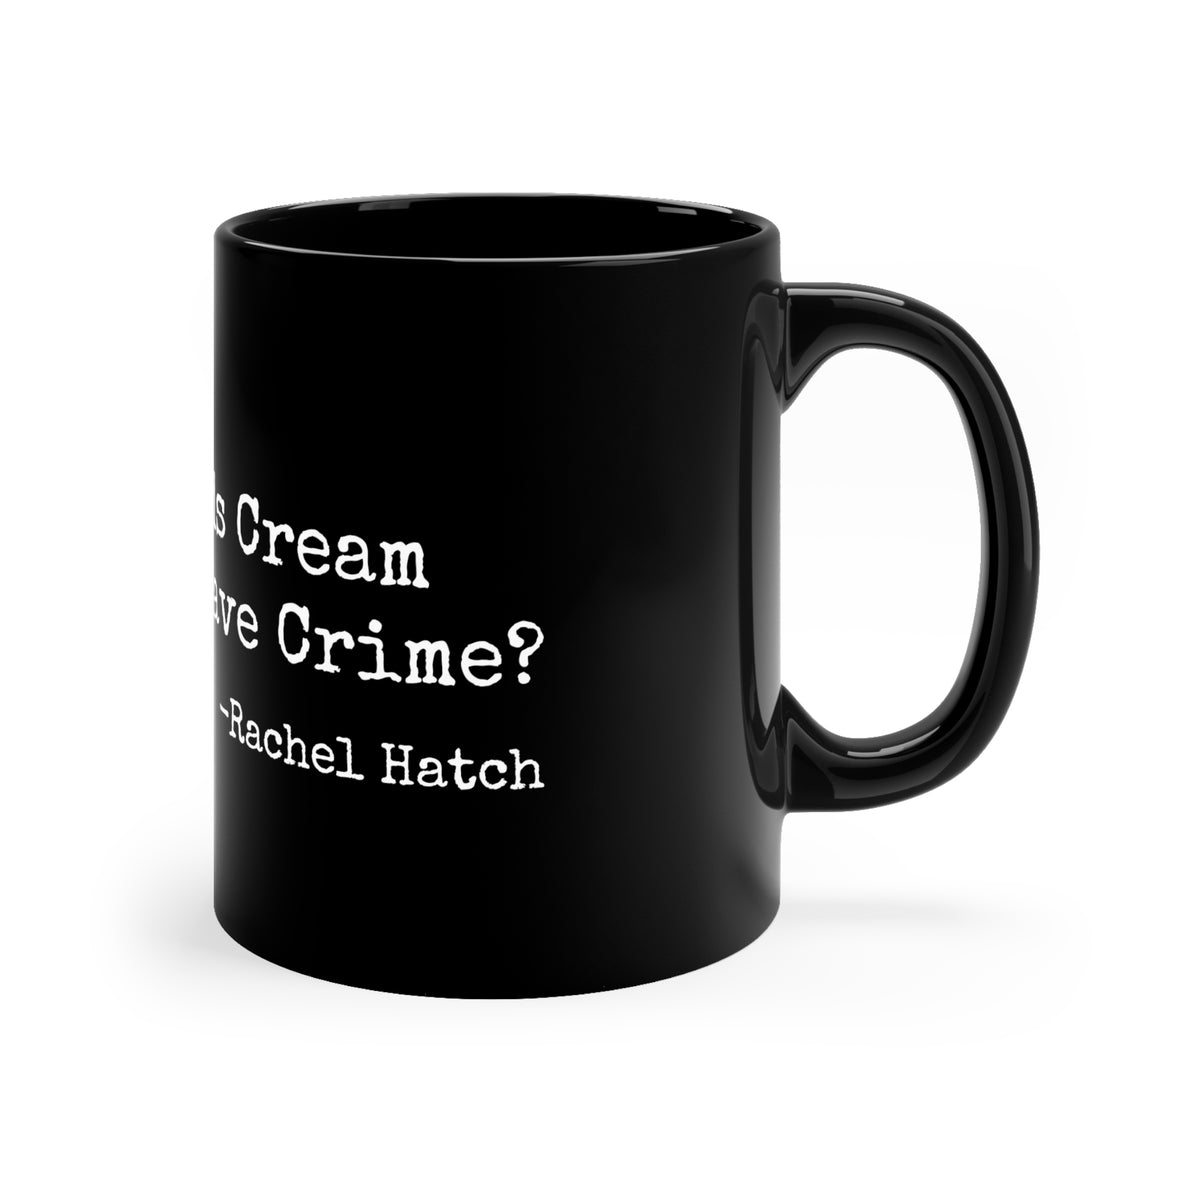 Who Needs Cream When You Have Crime? Coffee Mug